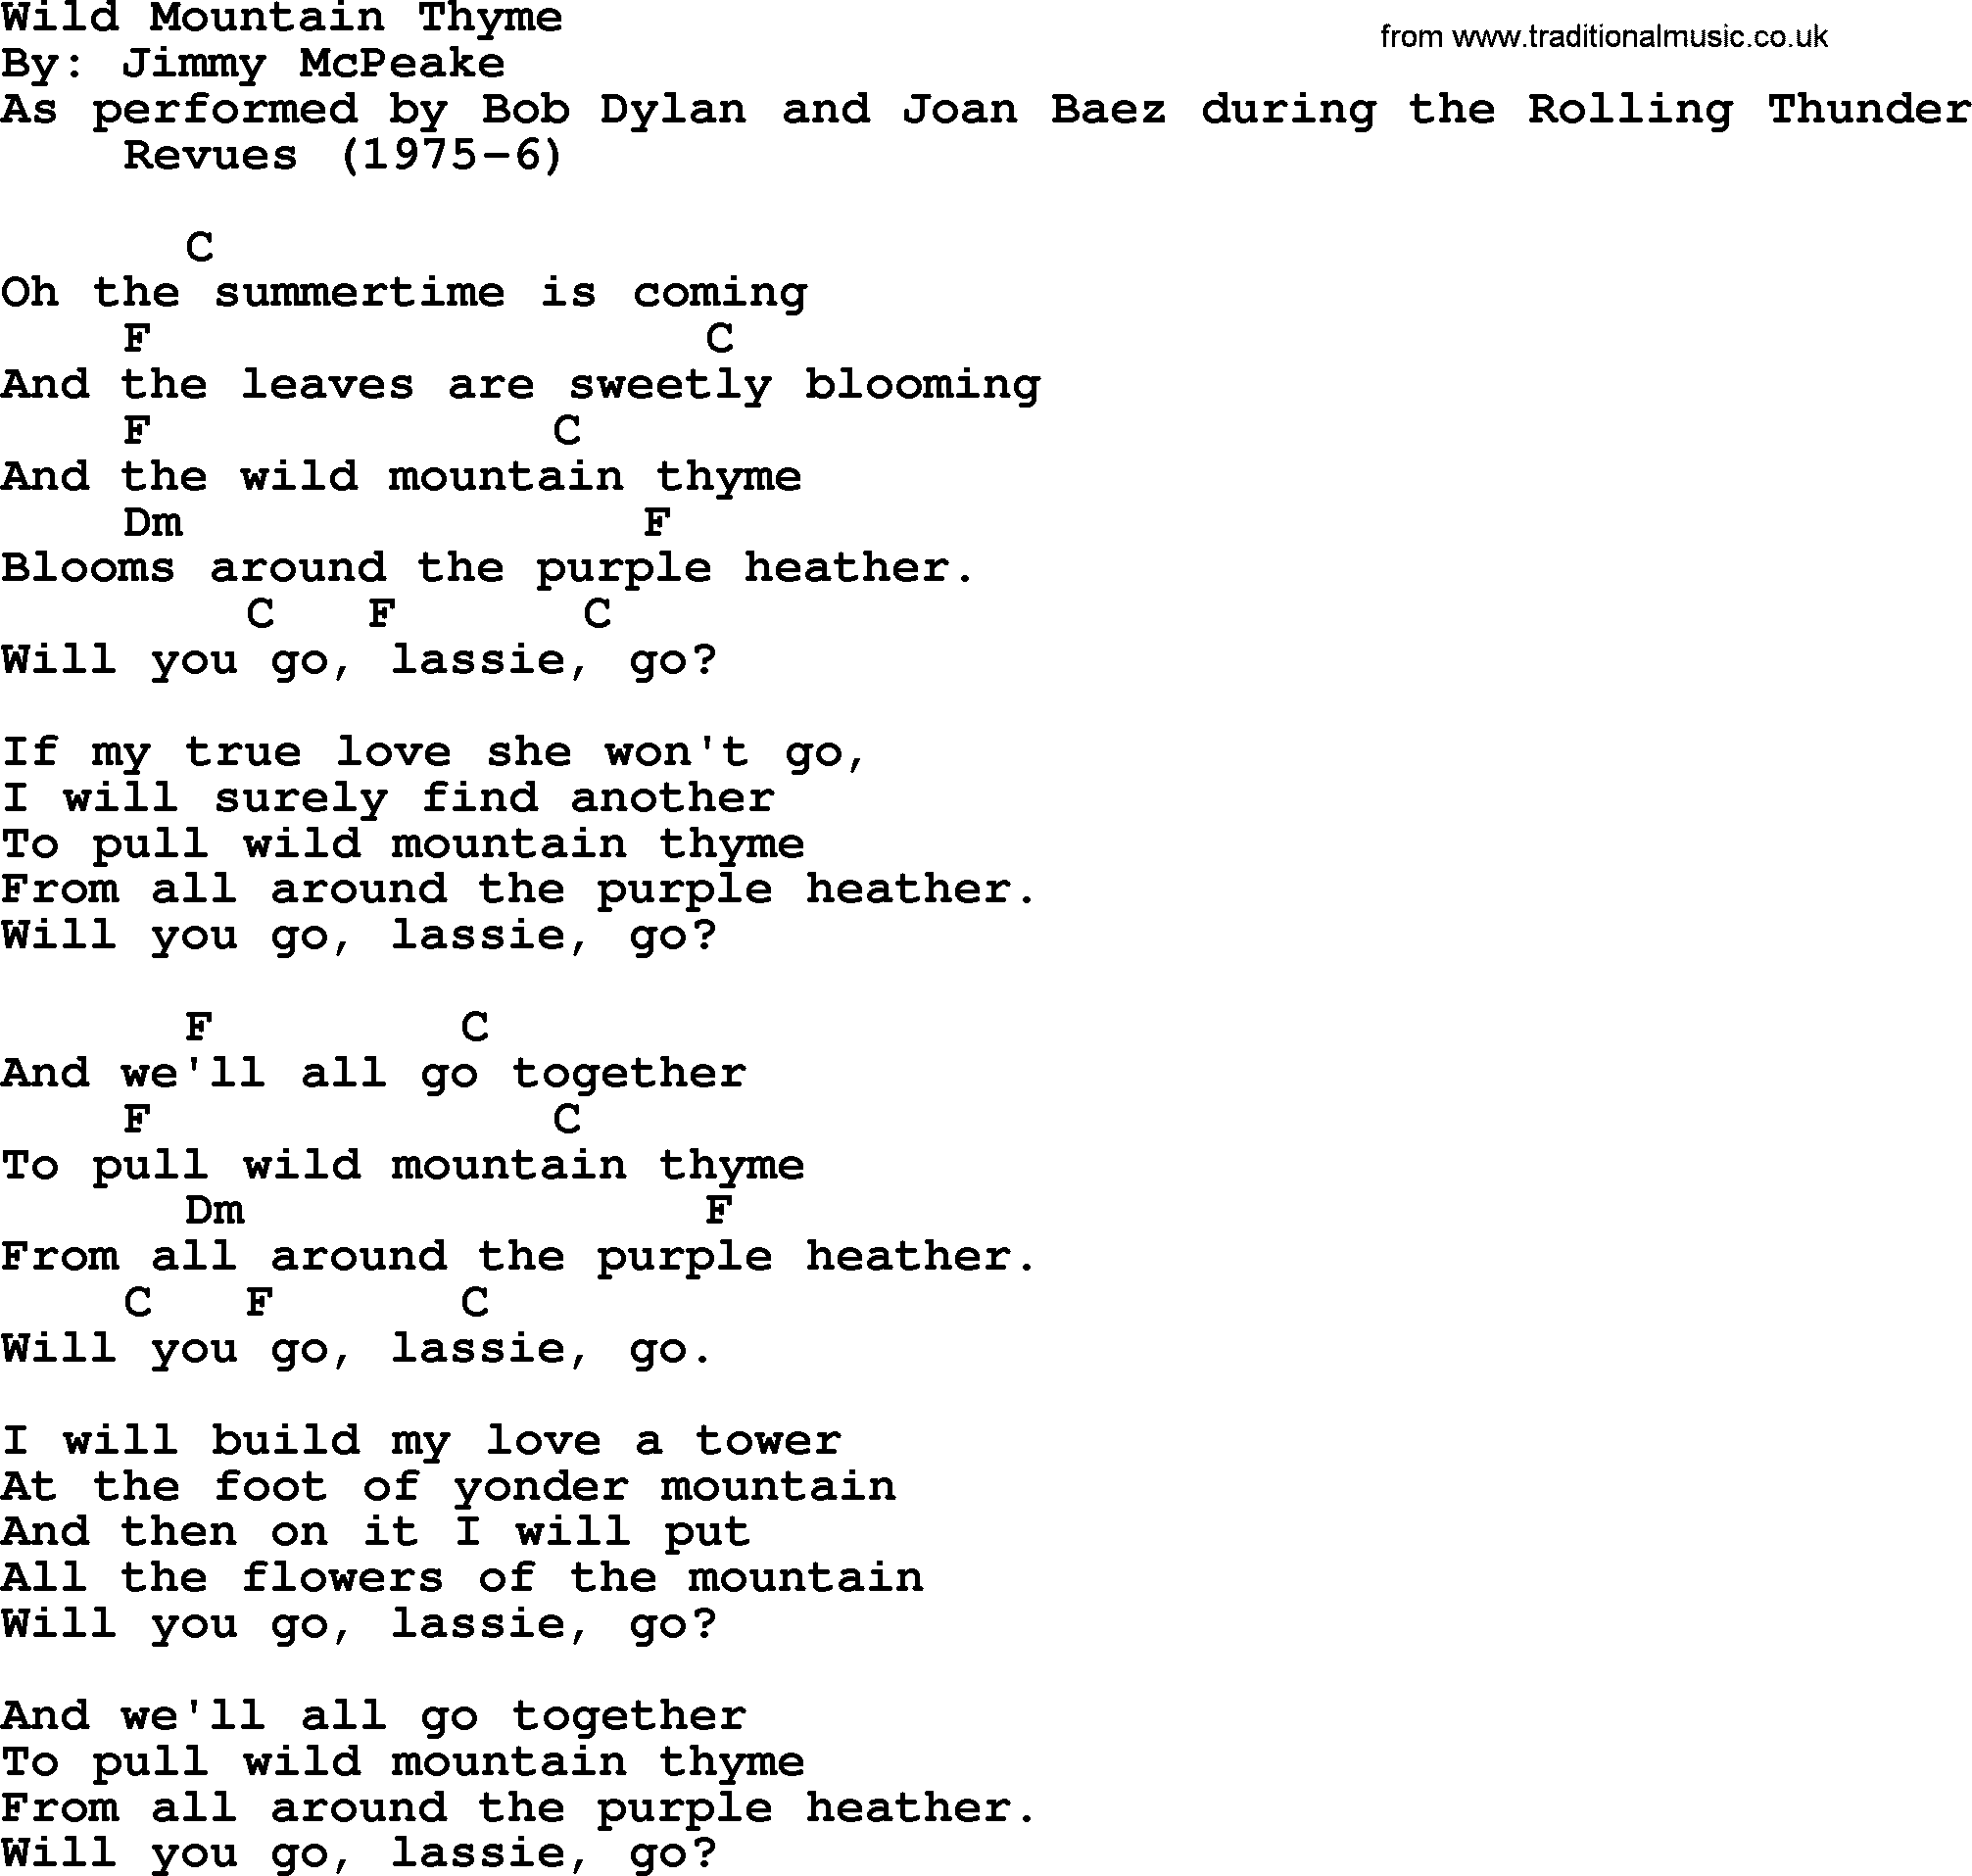 Bob Dylan song, lyrics with chords - Wild Mountain Thyme